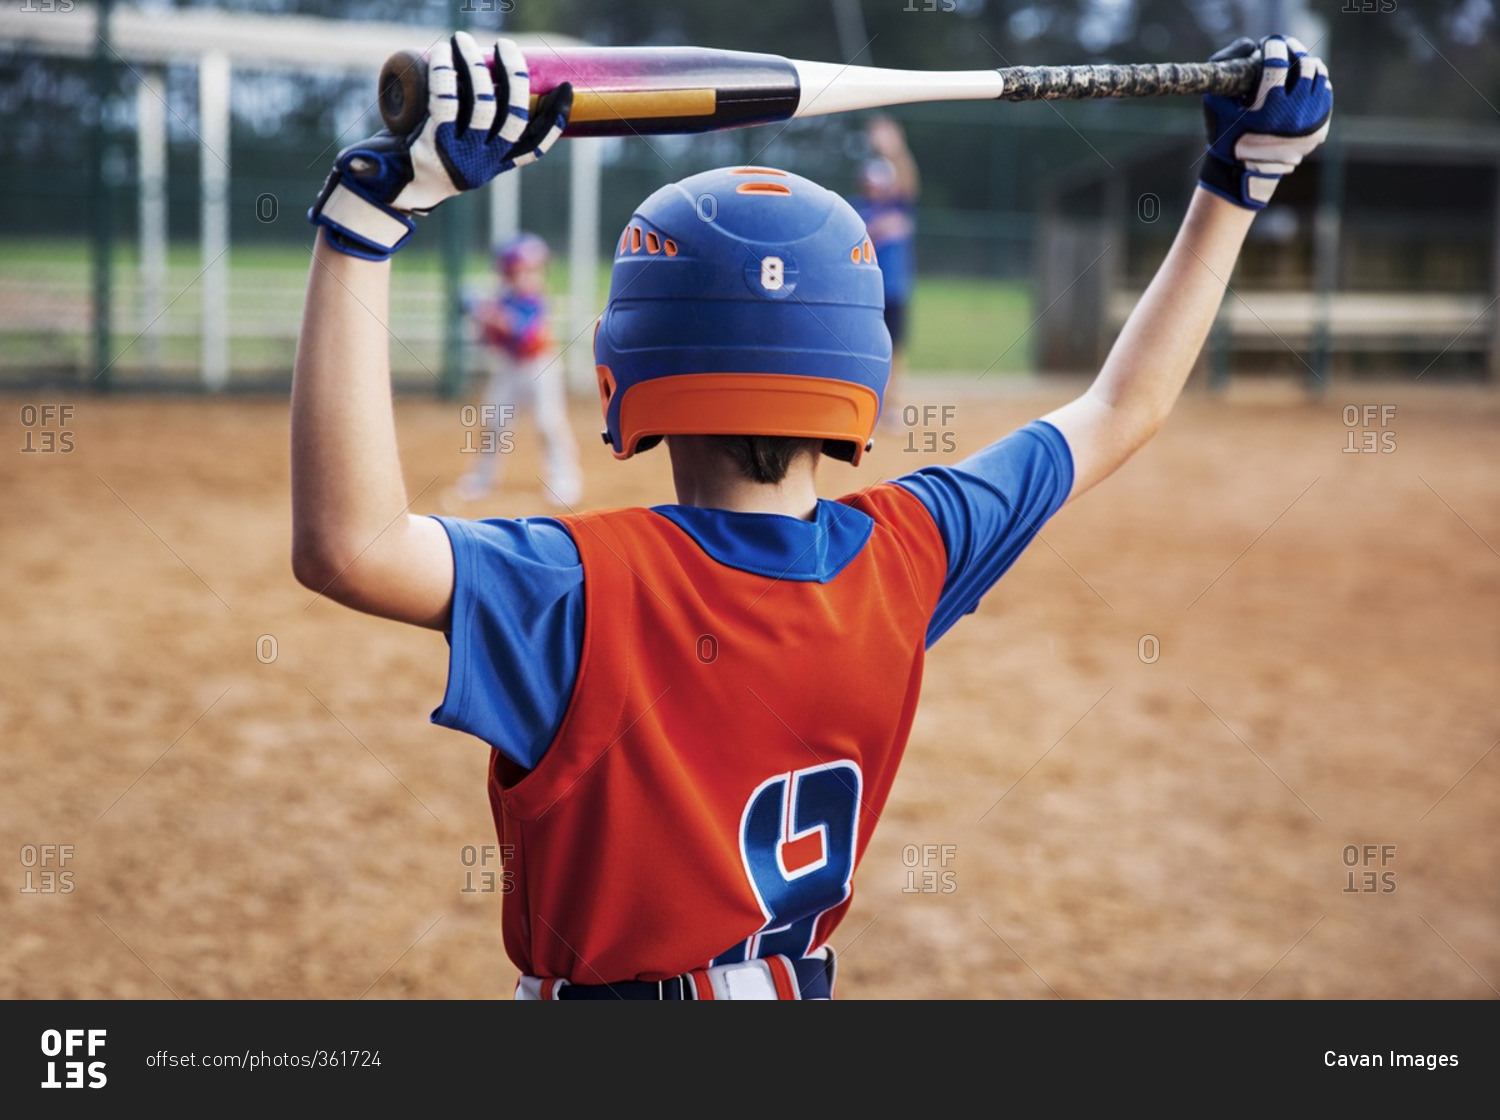 Rear view of boy holding baseball bat on field